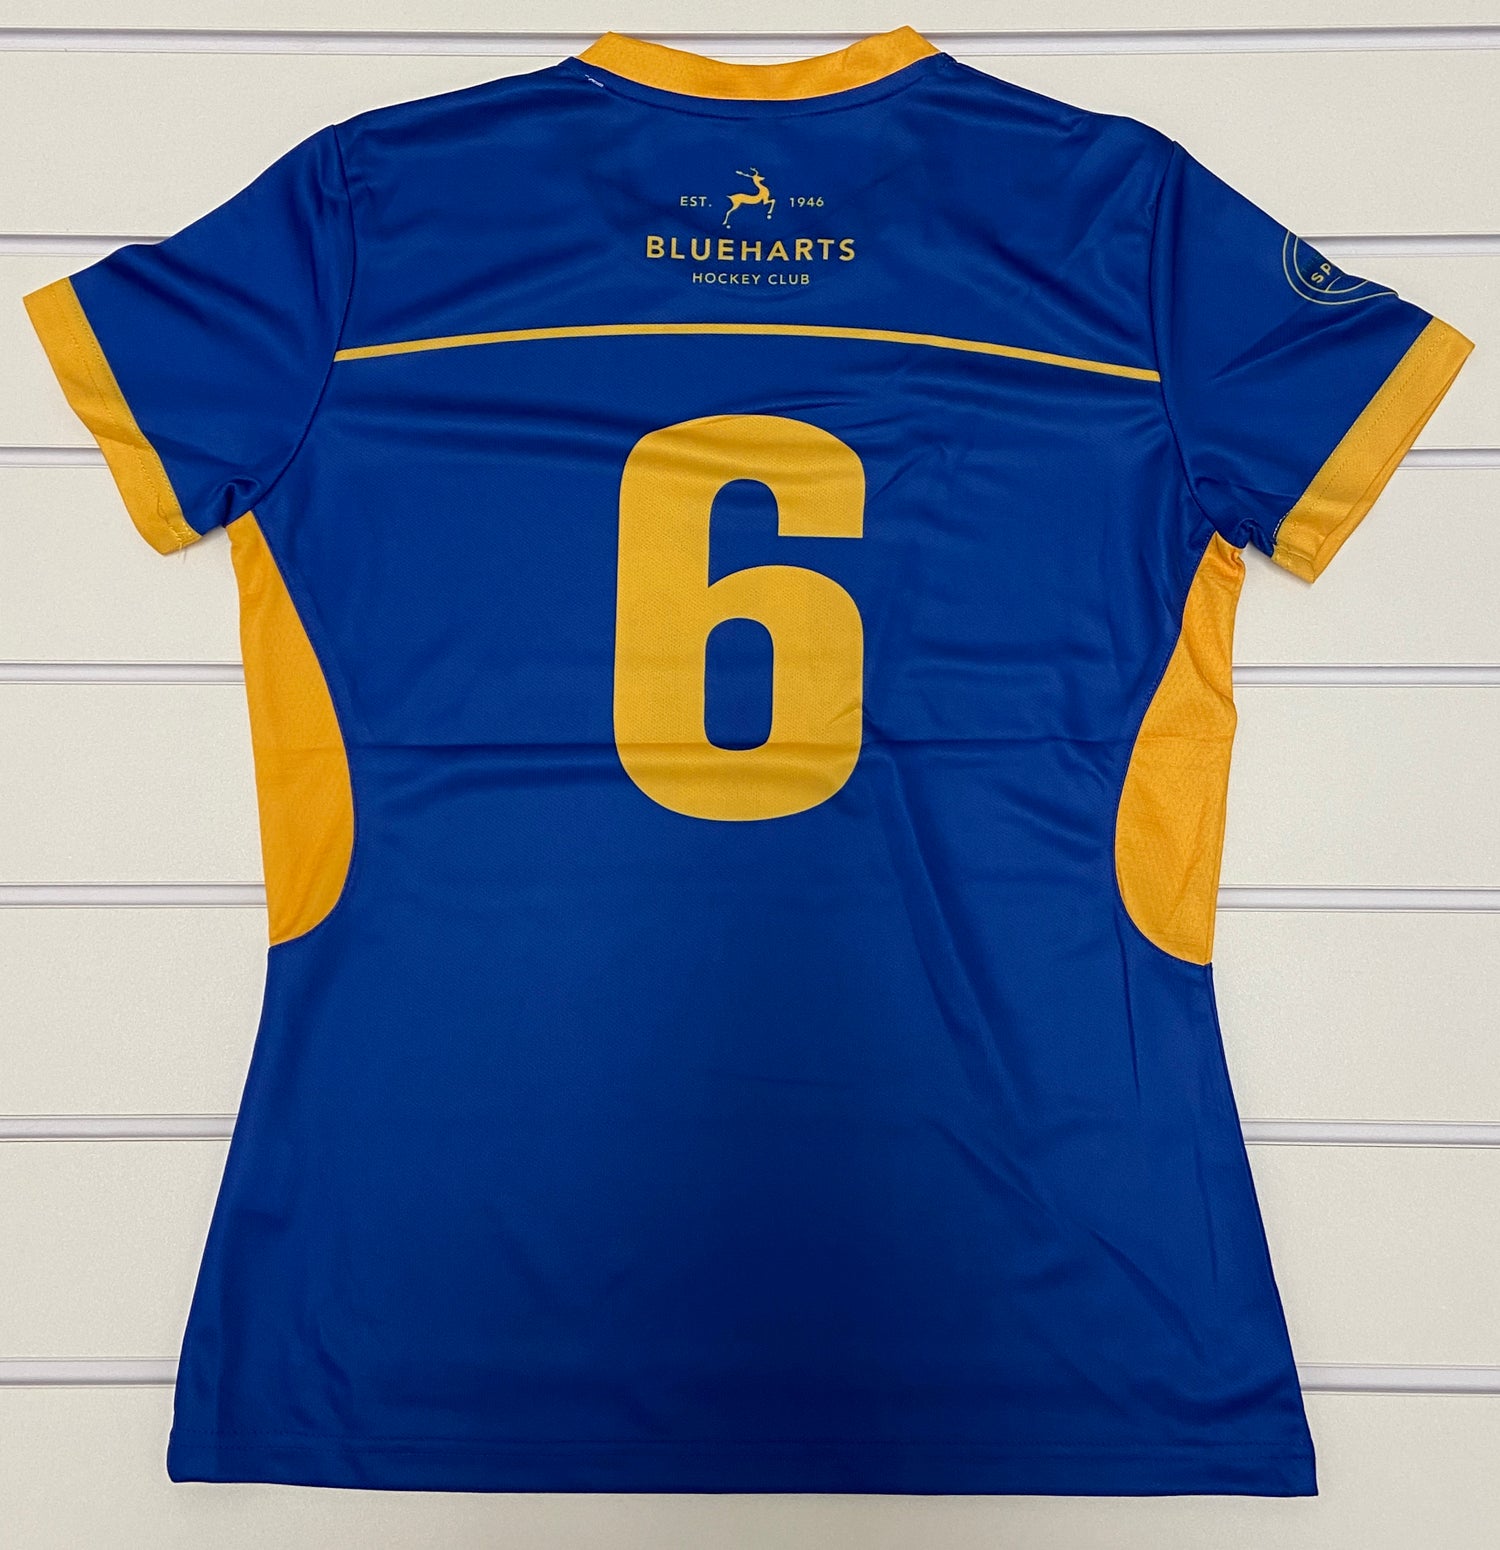 Blueharts Women's Home Playing Shirt (X-Small, size 8-10)